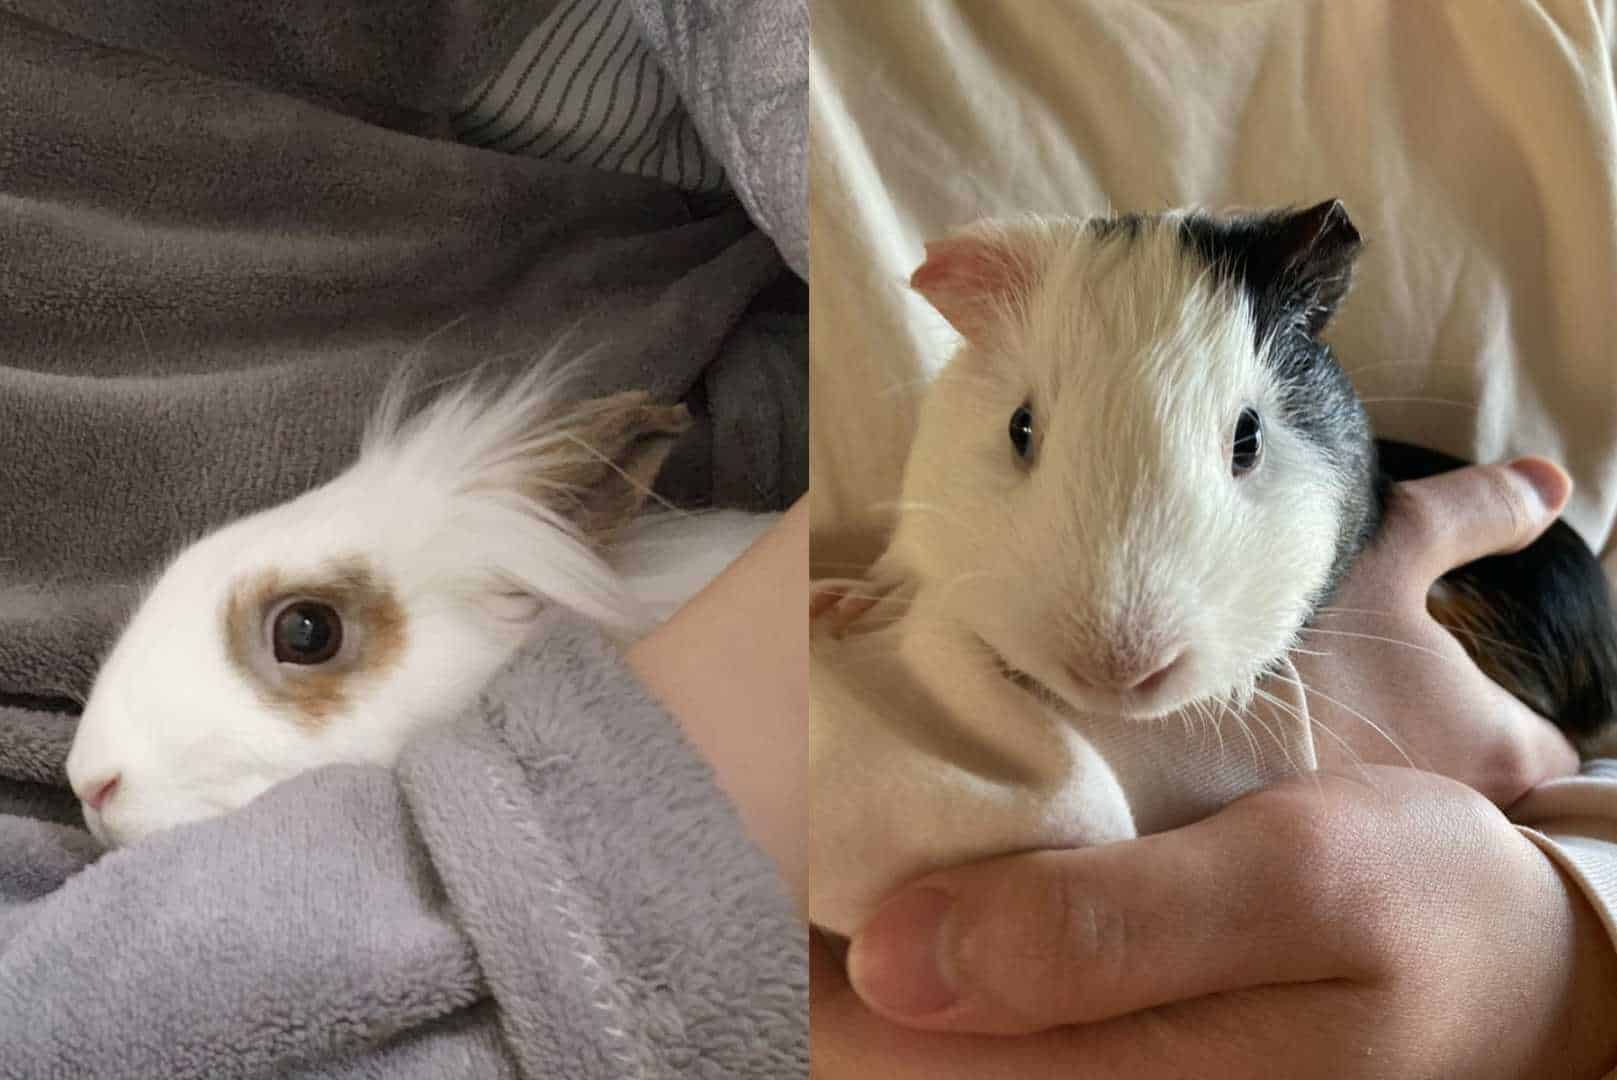 guinea pig vs rabbit